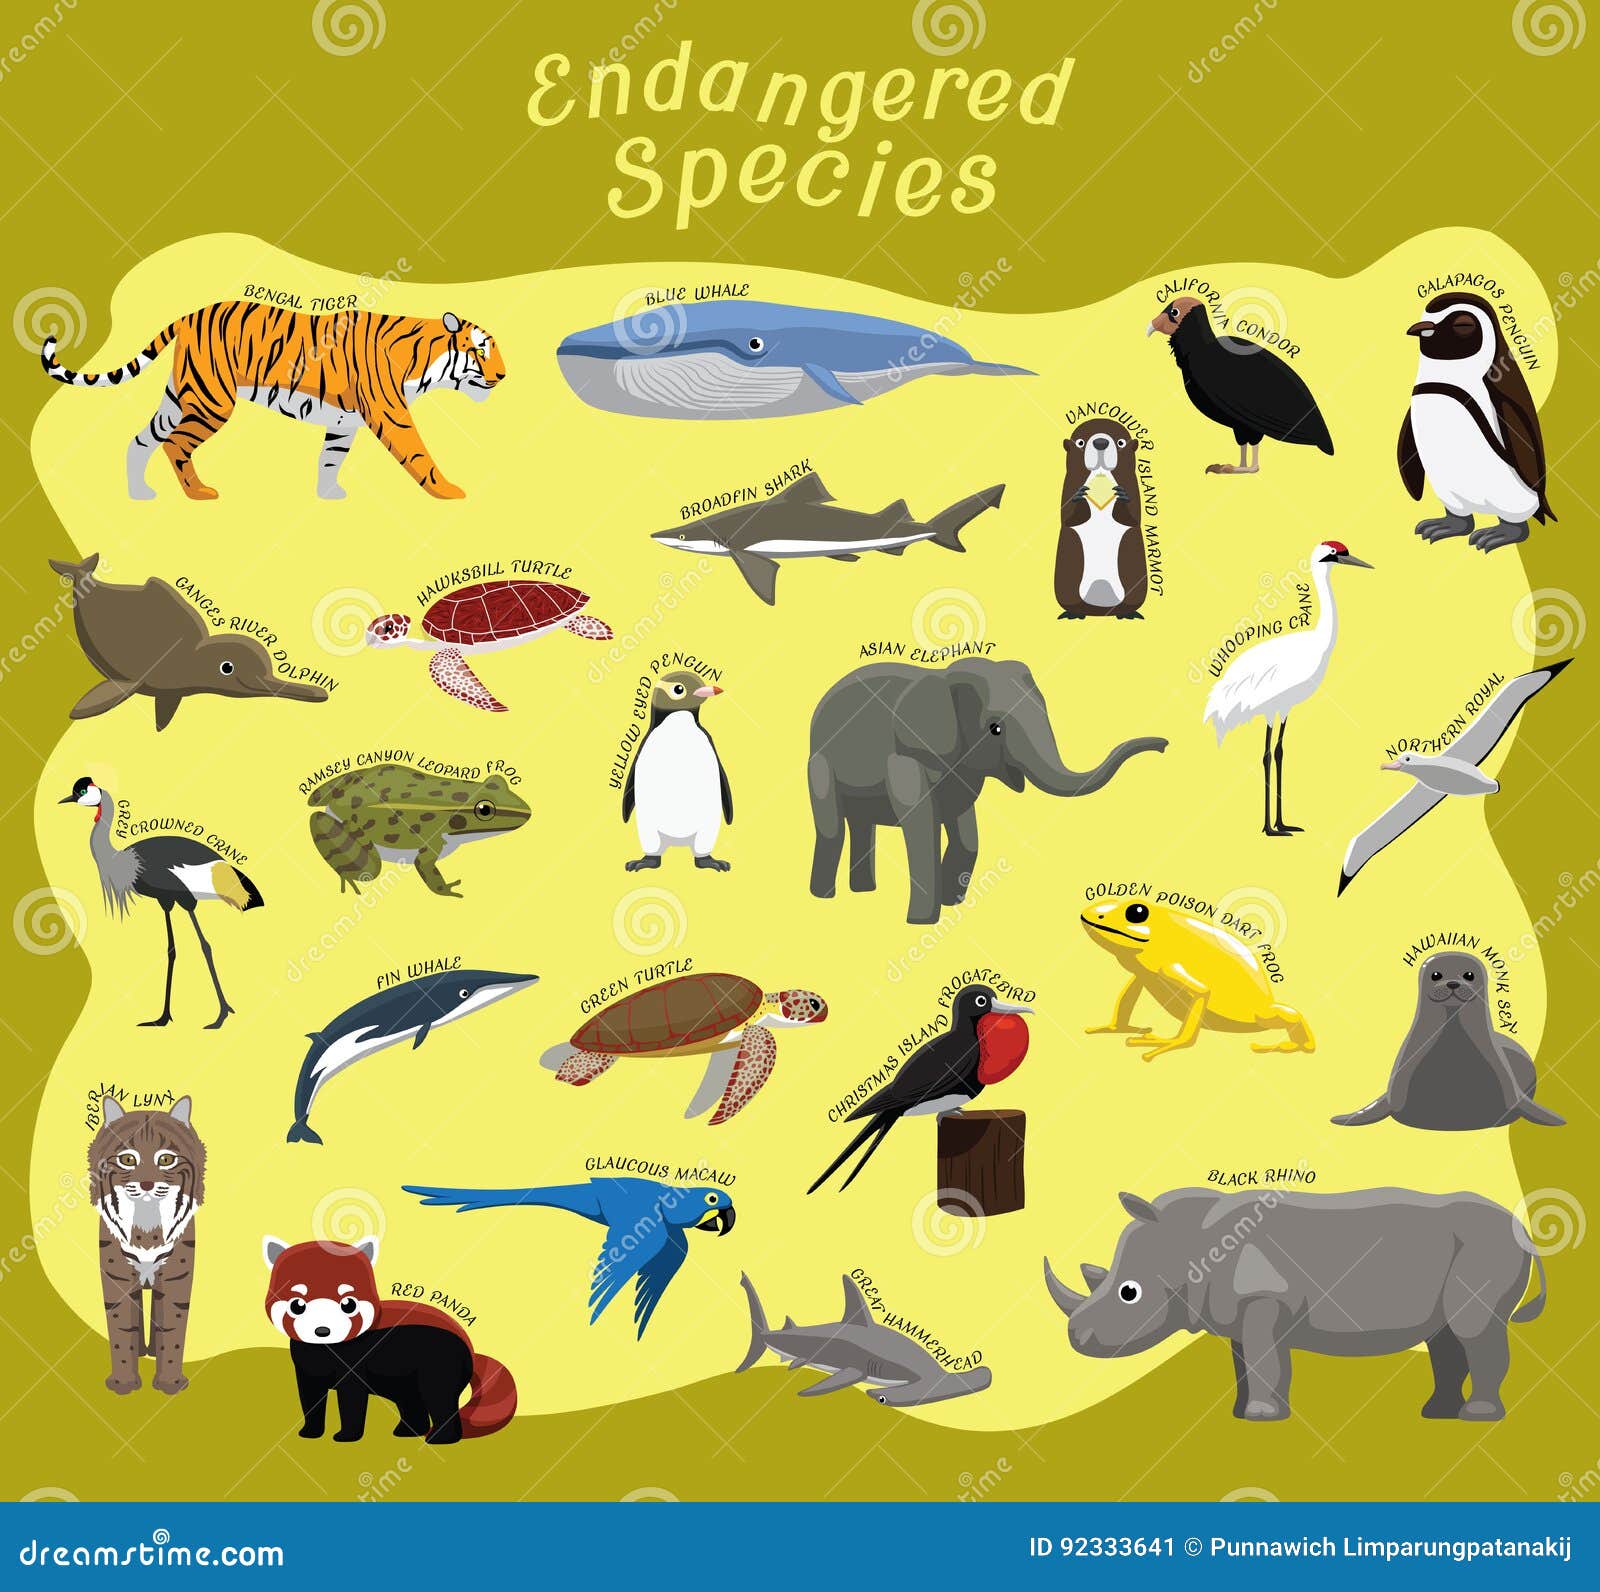 endangered species animal set cartoon  